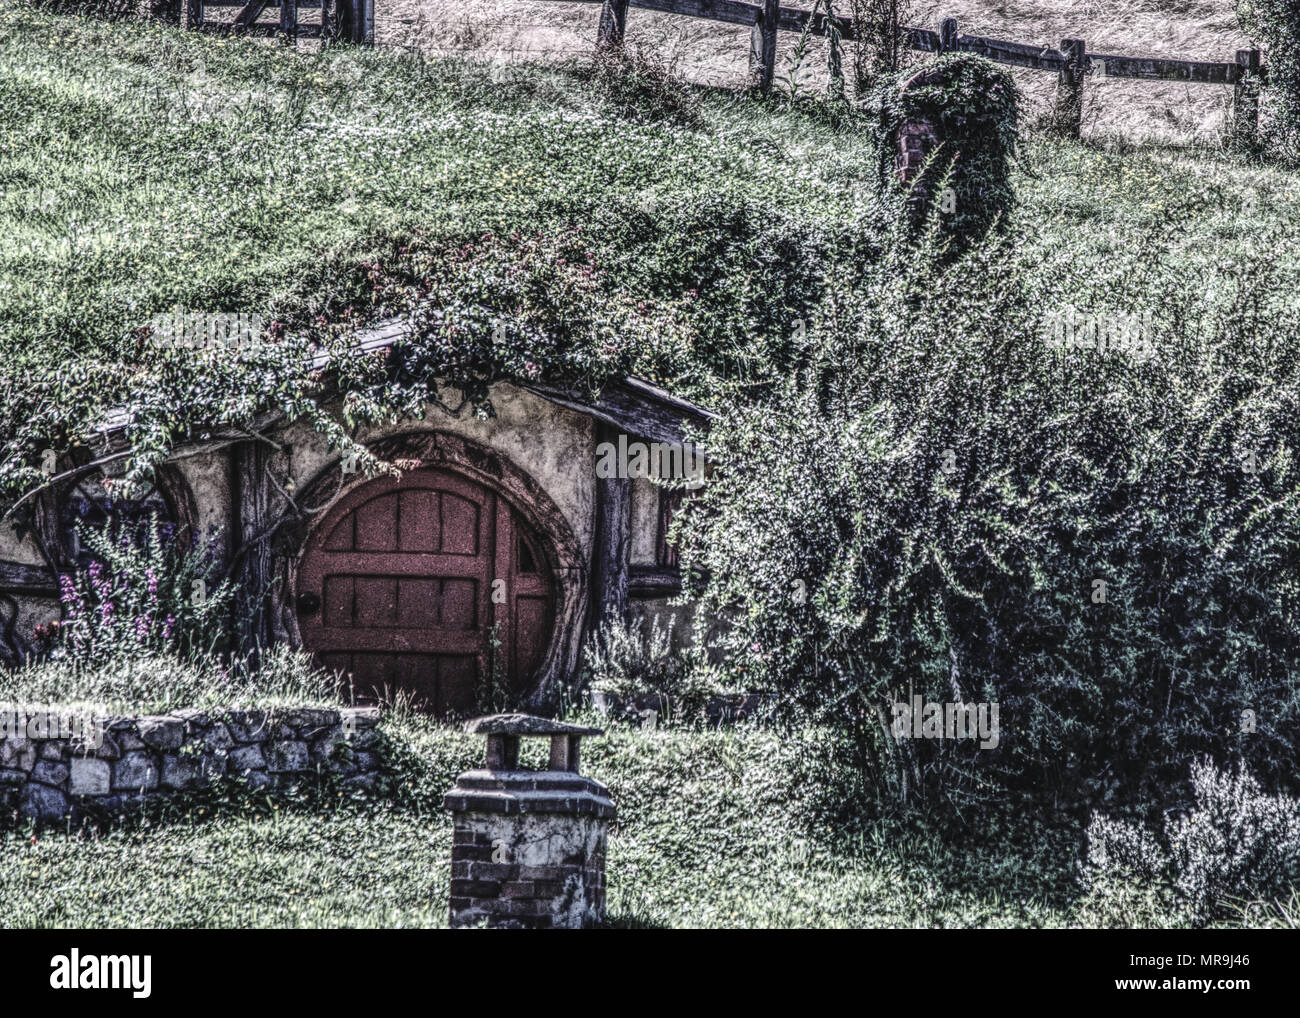 hobbit hole in Hobbiton, Nz Stock Photo